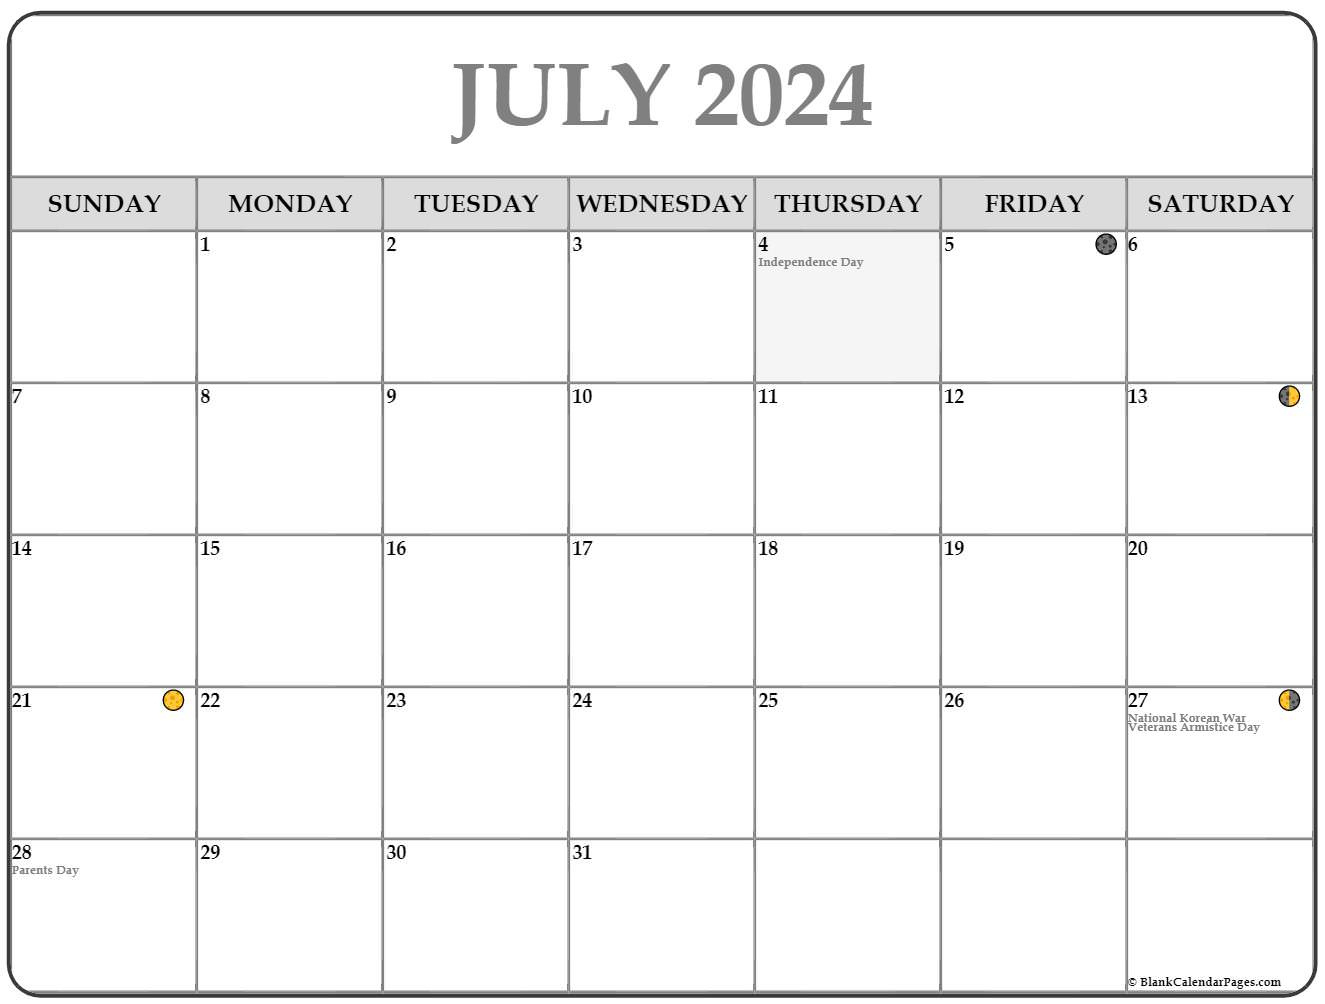 July 2024 Lunar Calendar | Moon Phase Calendar regarding July Moon Phases Calendar 2024